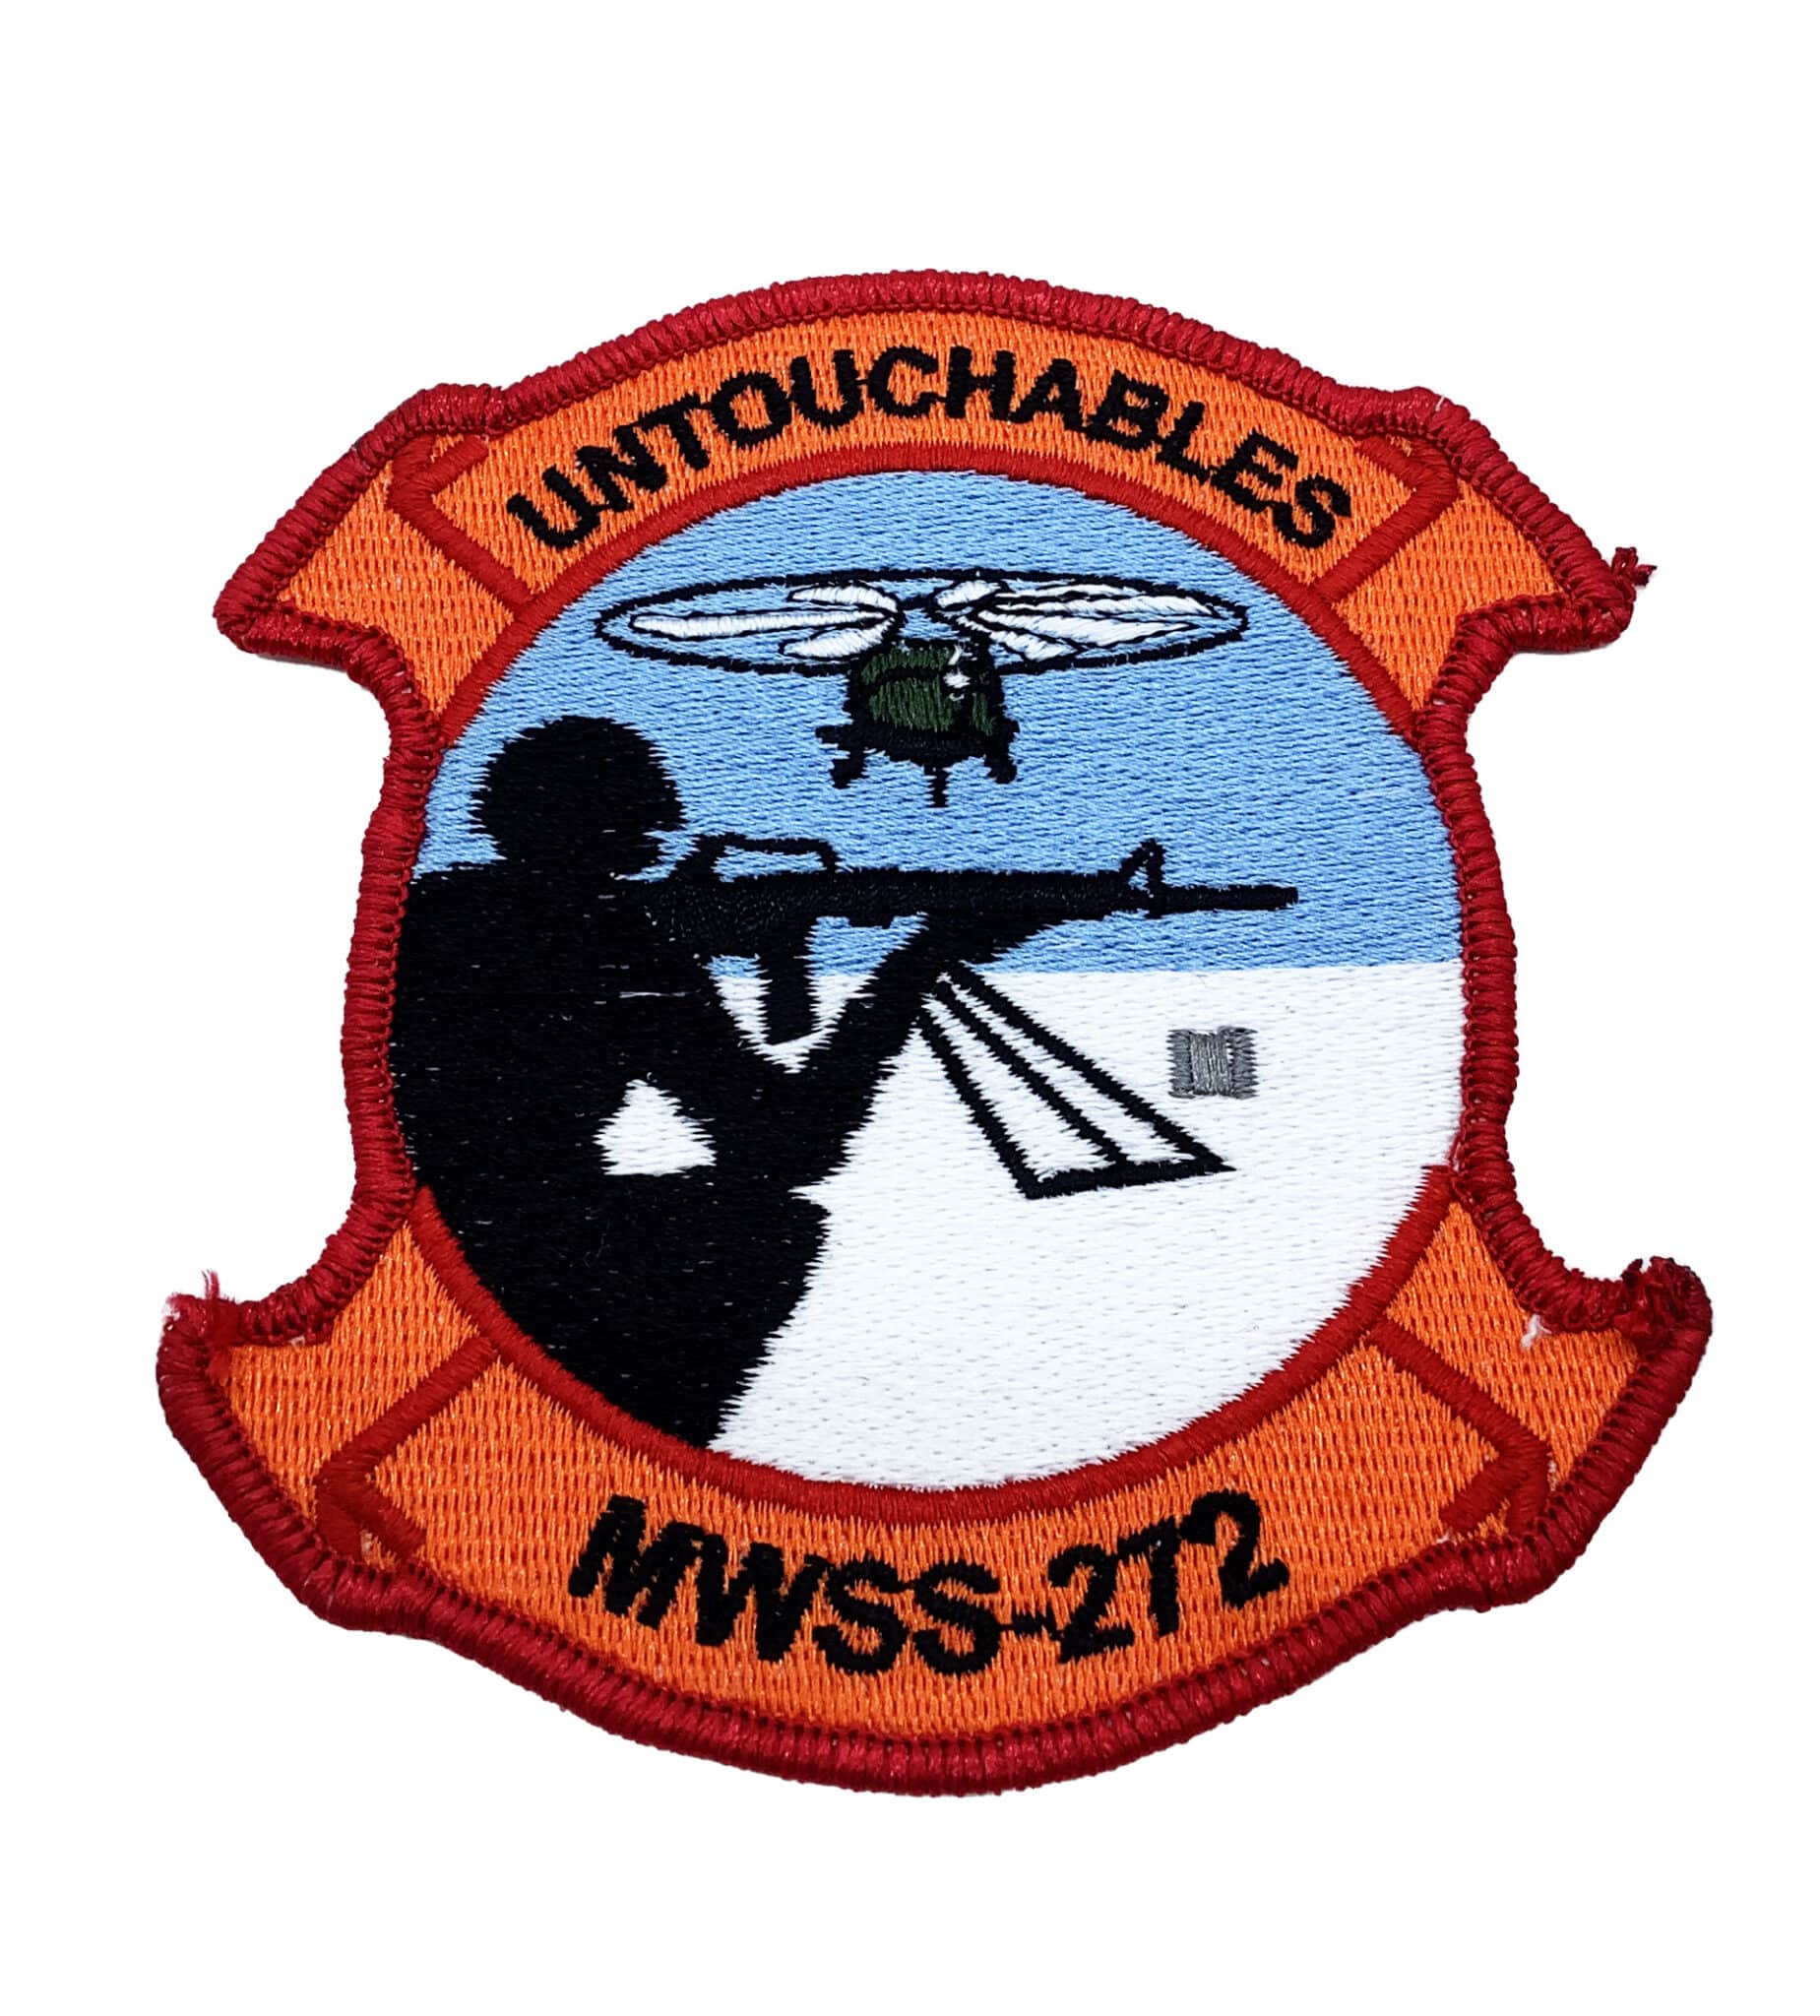 MWSS-272 Untouchables Patch – Plastic Backing